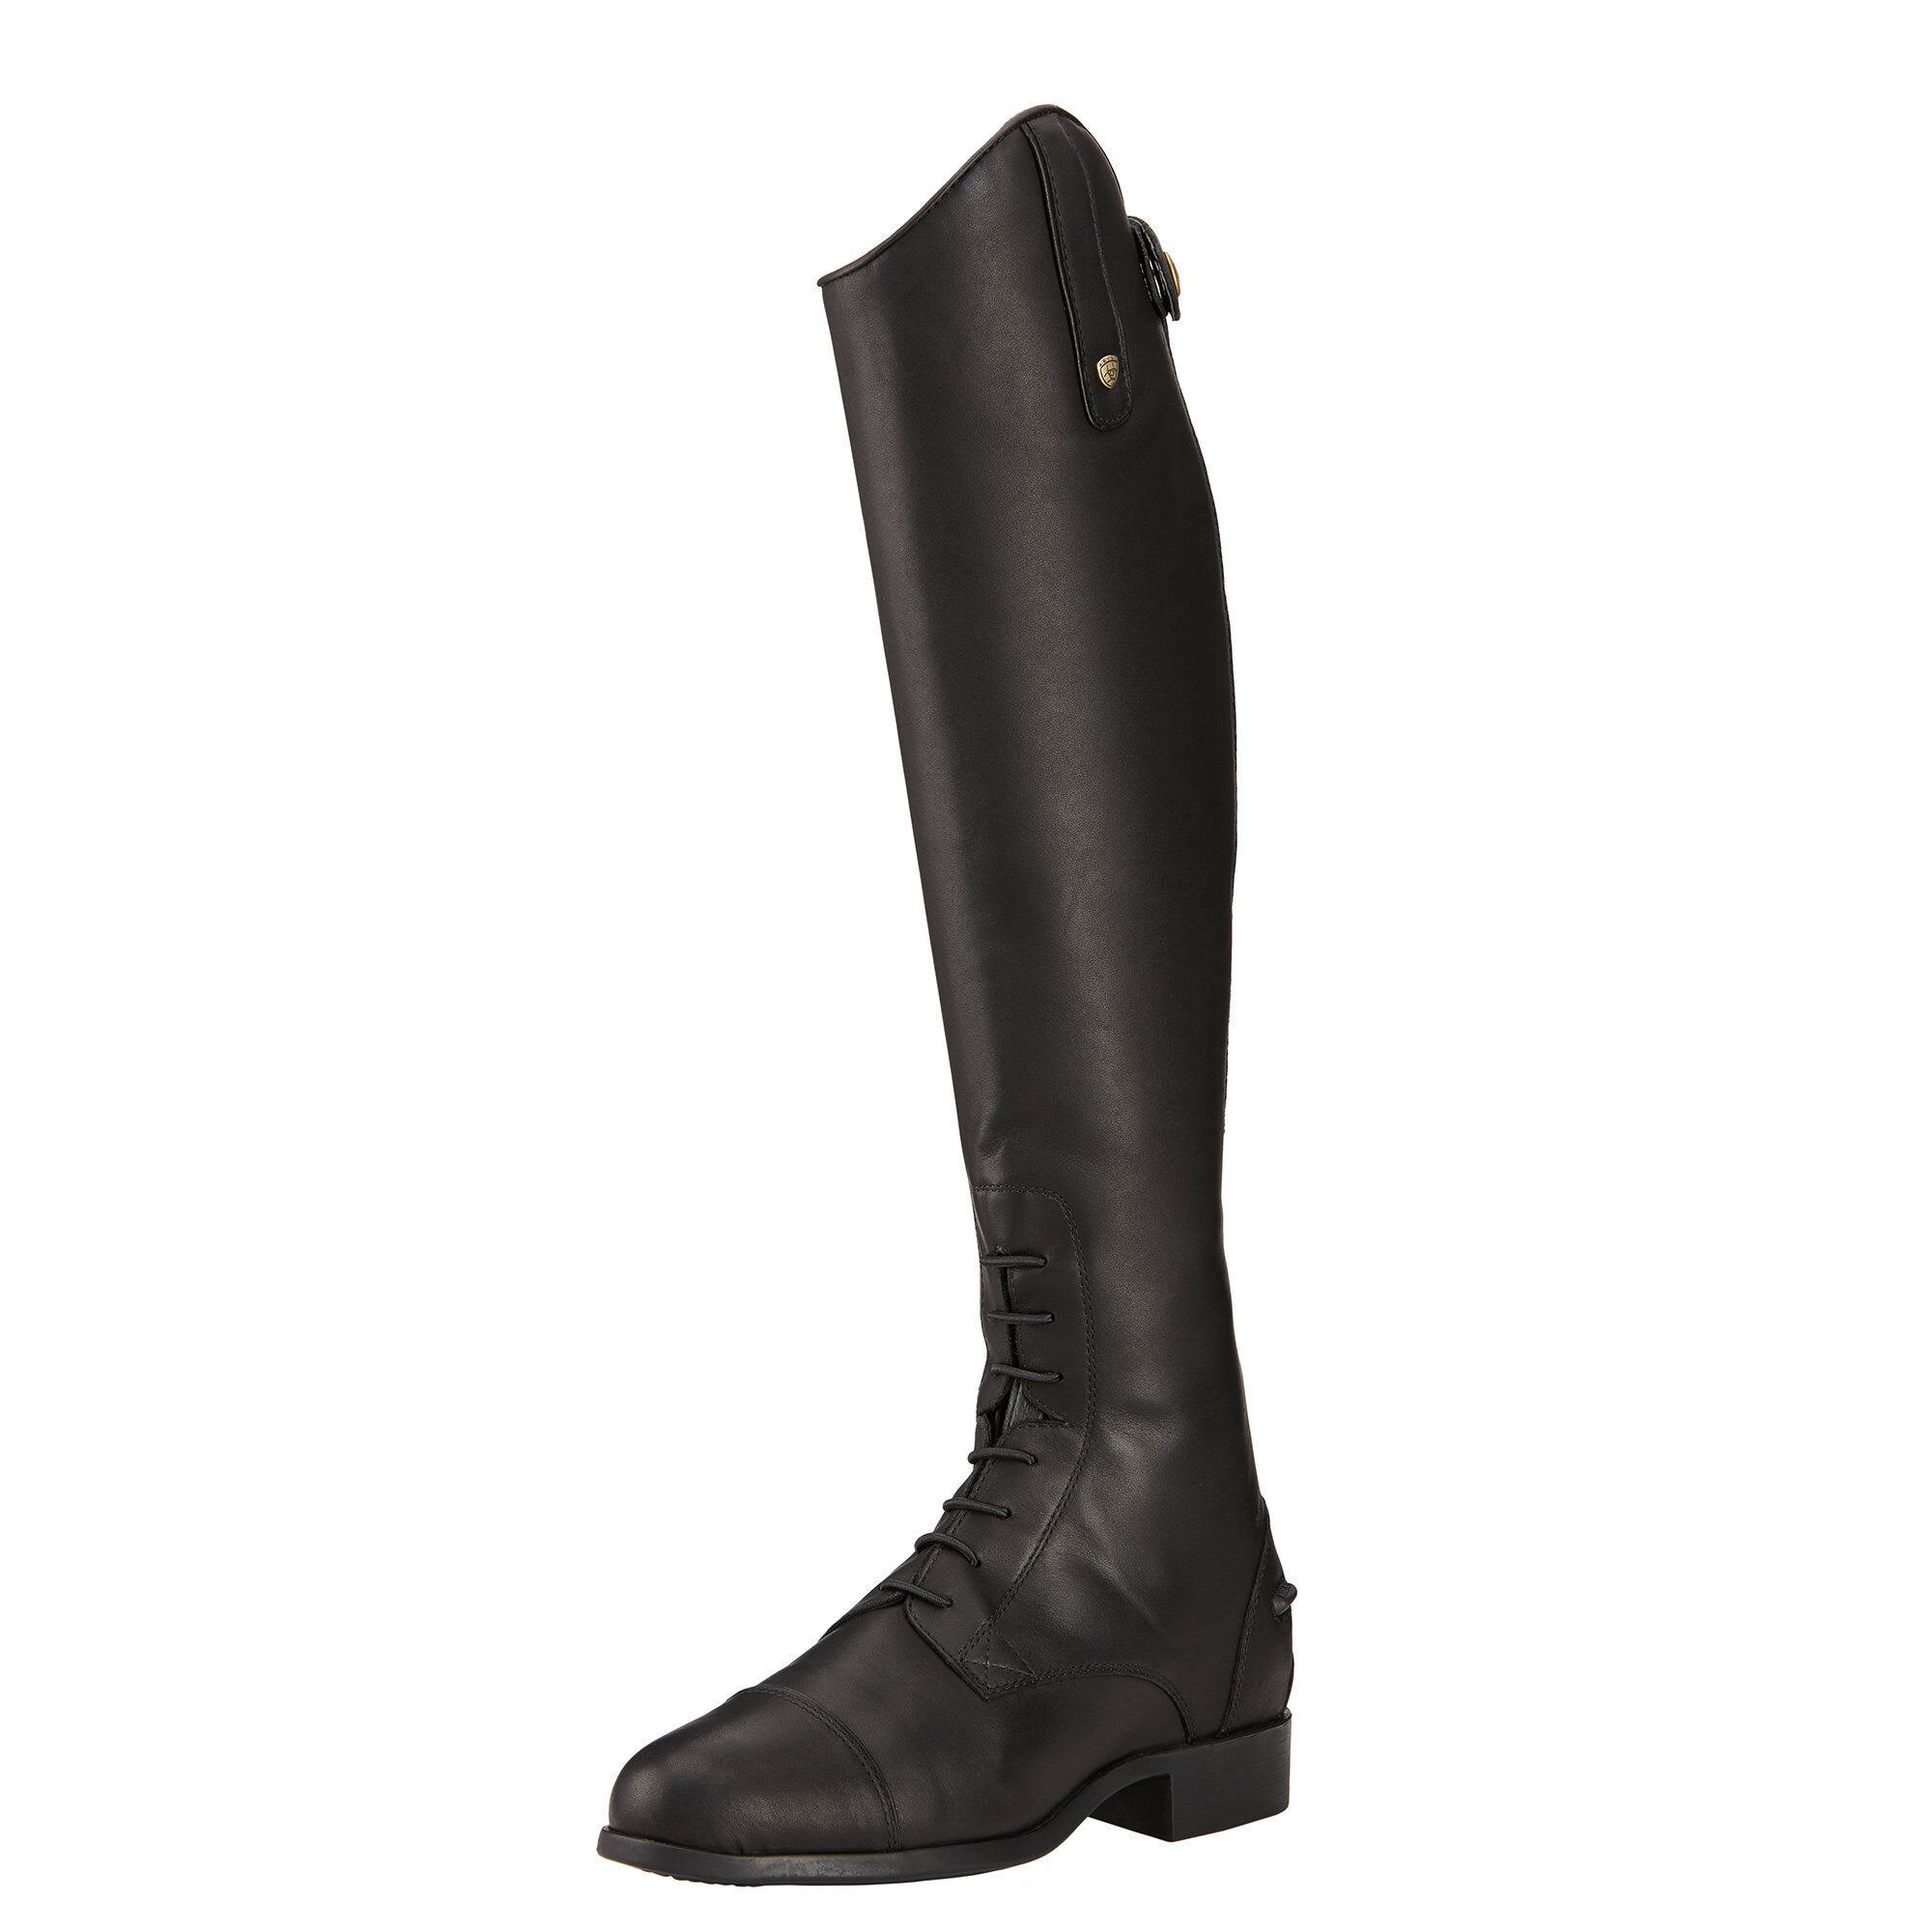 Ariat Women's Contour II Field Zip Boots - Black, 38 EU